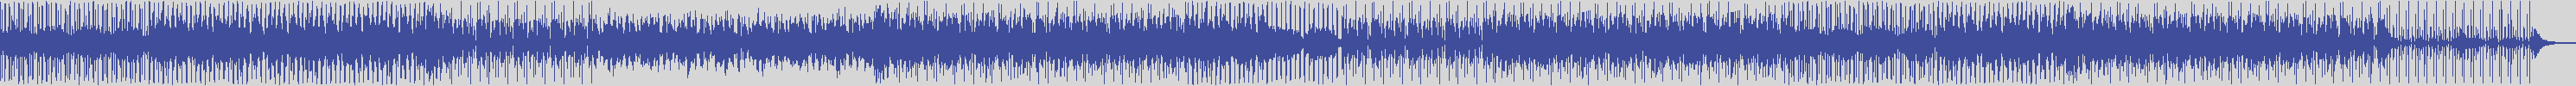 noclouds_chillout [NOC005] Alphonzo Rantanen - Aaron Bing [Deep & Chil Edit] audio wave form